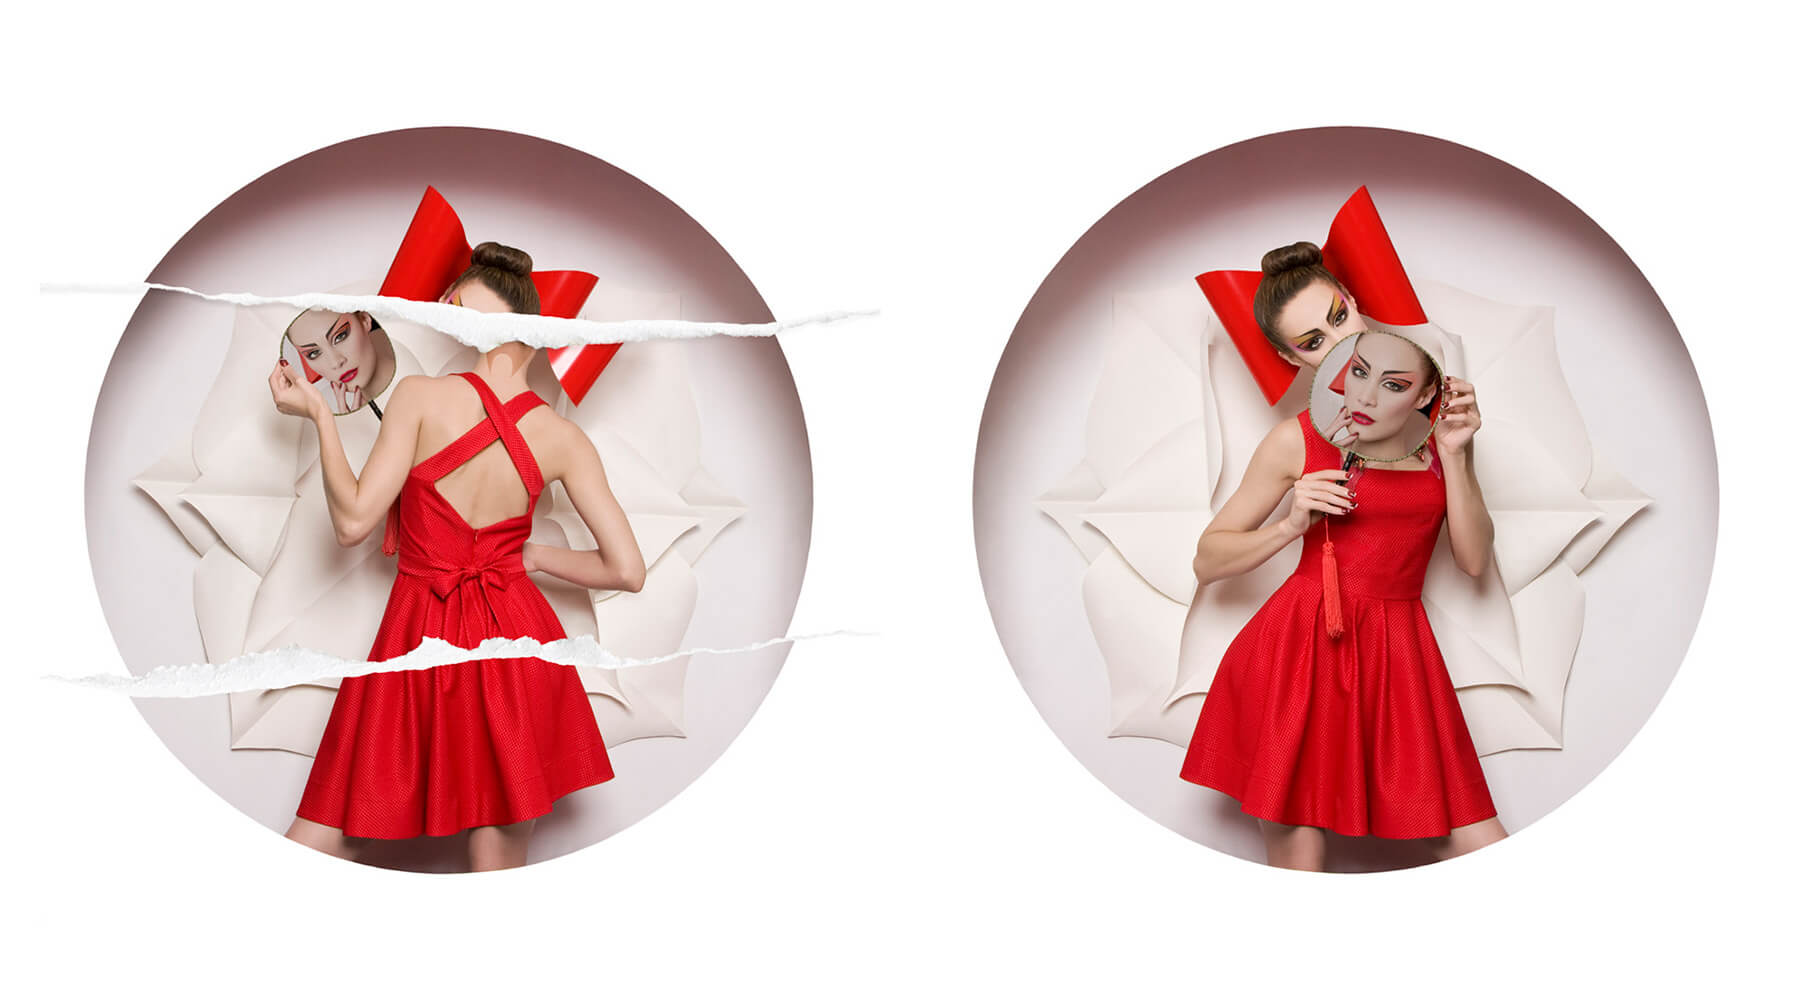 Angel-Ruiz-Ruiz-Fashion-Photographer-Campaign-SS-2014-Divina-Providencia-Madrid-Japan-Red-Dress-1796x1000